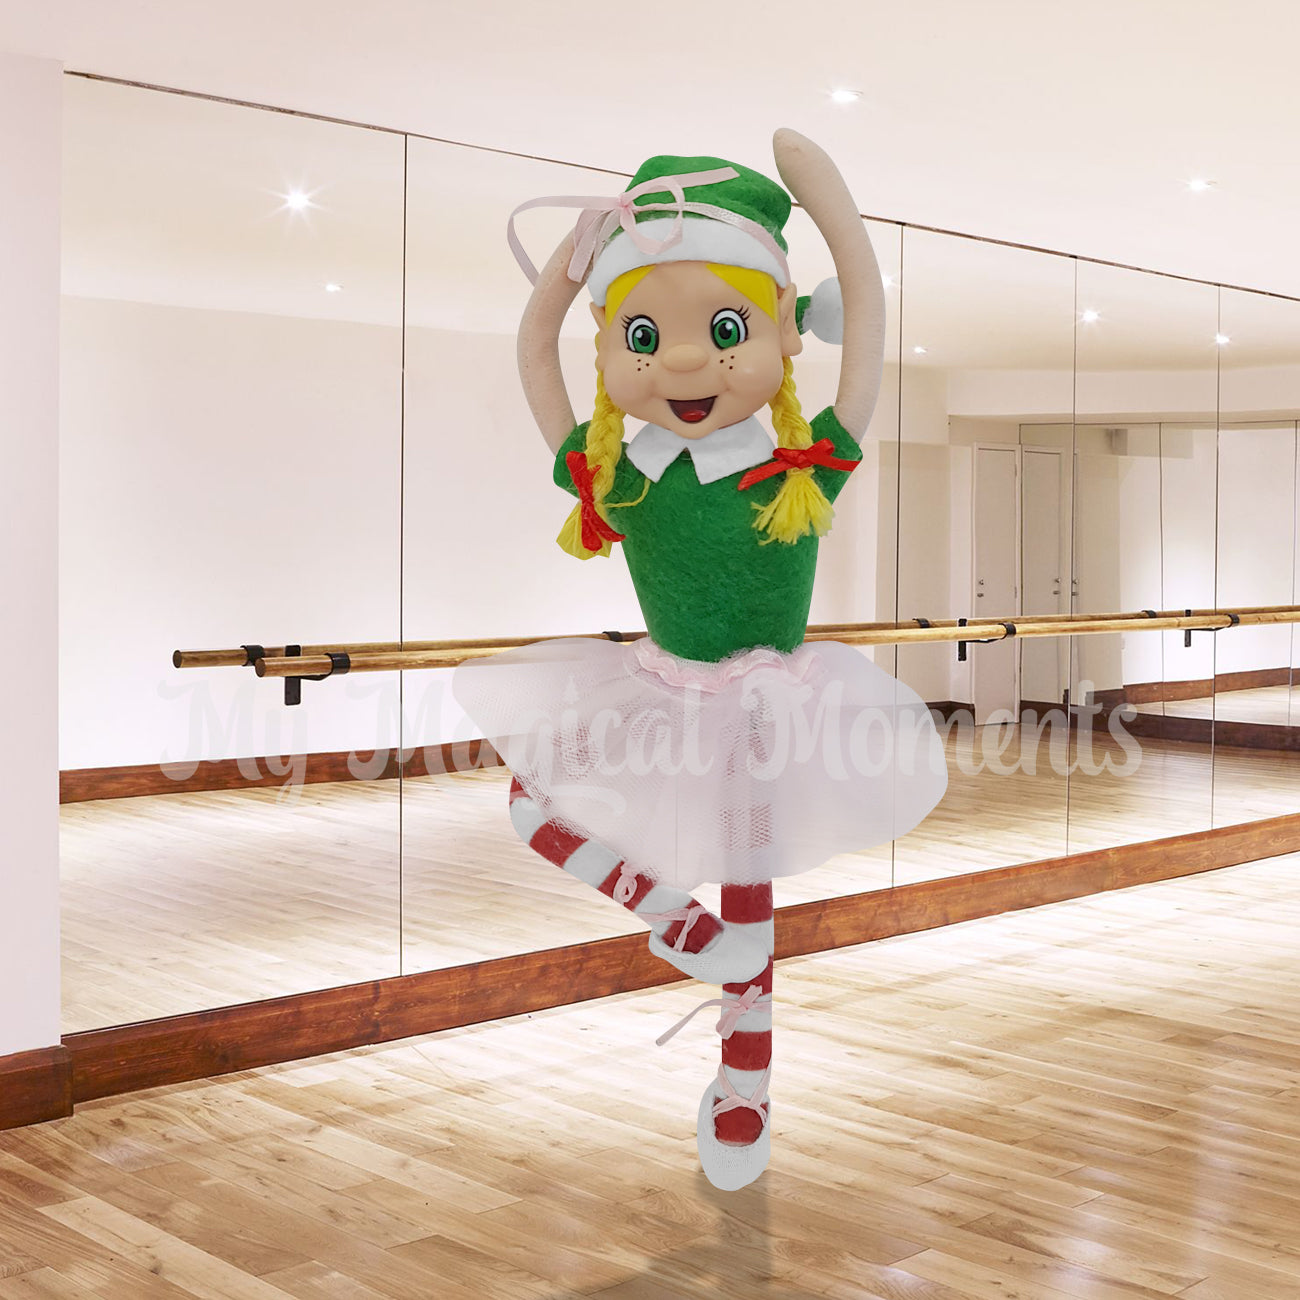 Elf in a ballet costume